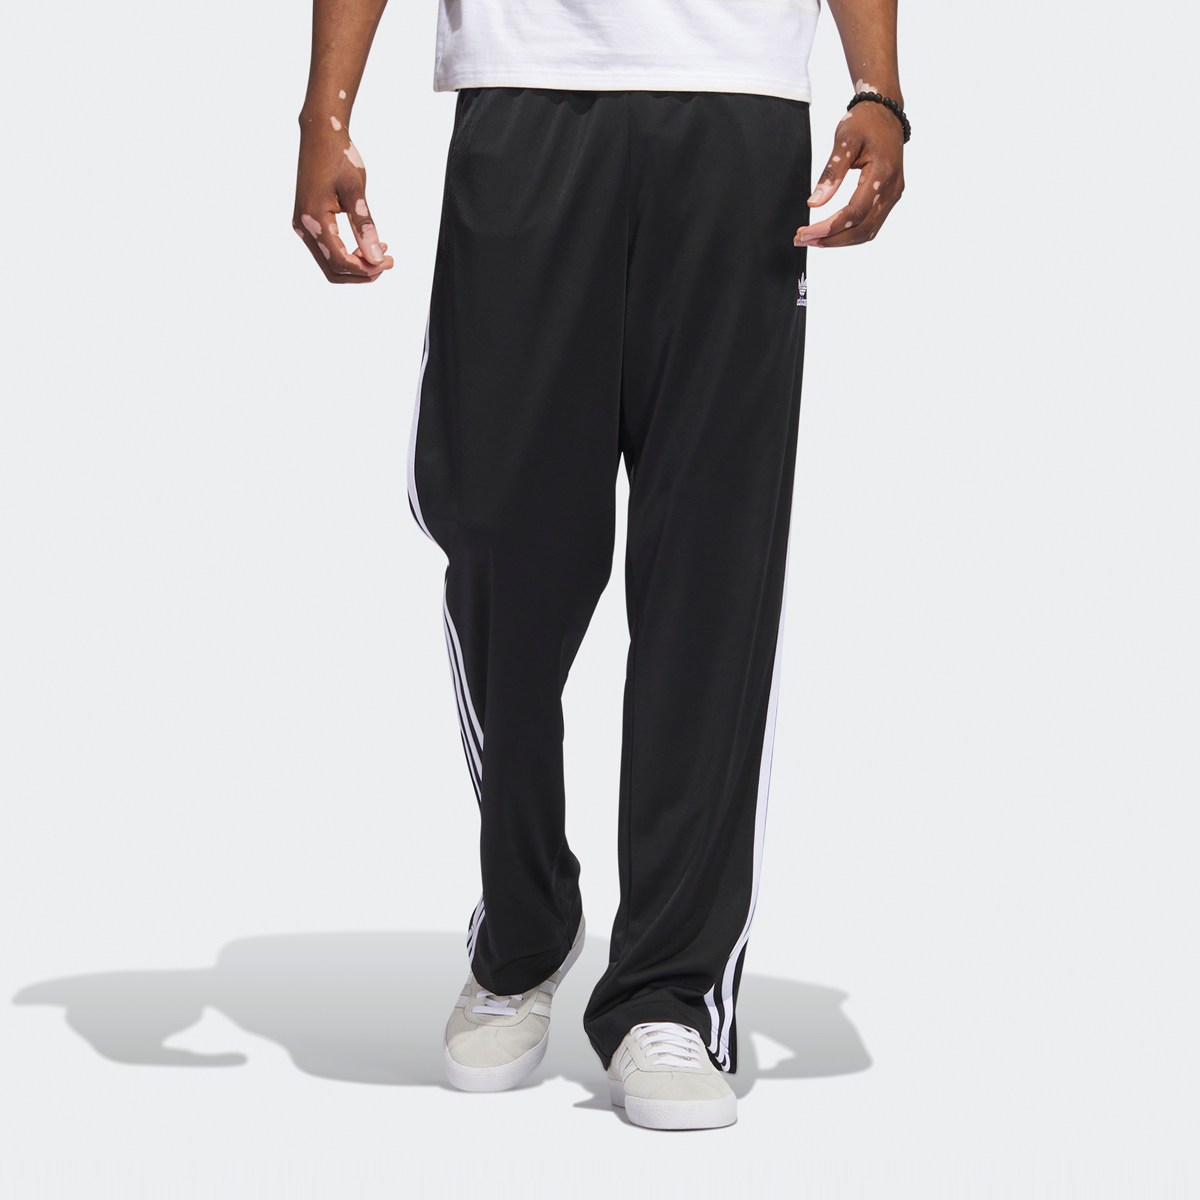 Pantalon de Survêtement adicolor Firebird, adidas Originals, Apparel, black/white, taille: M